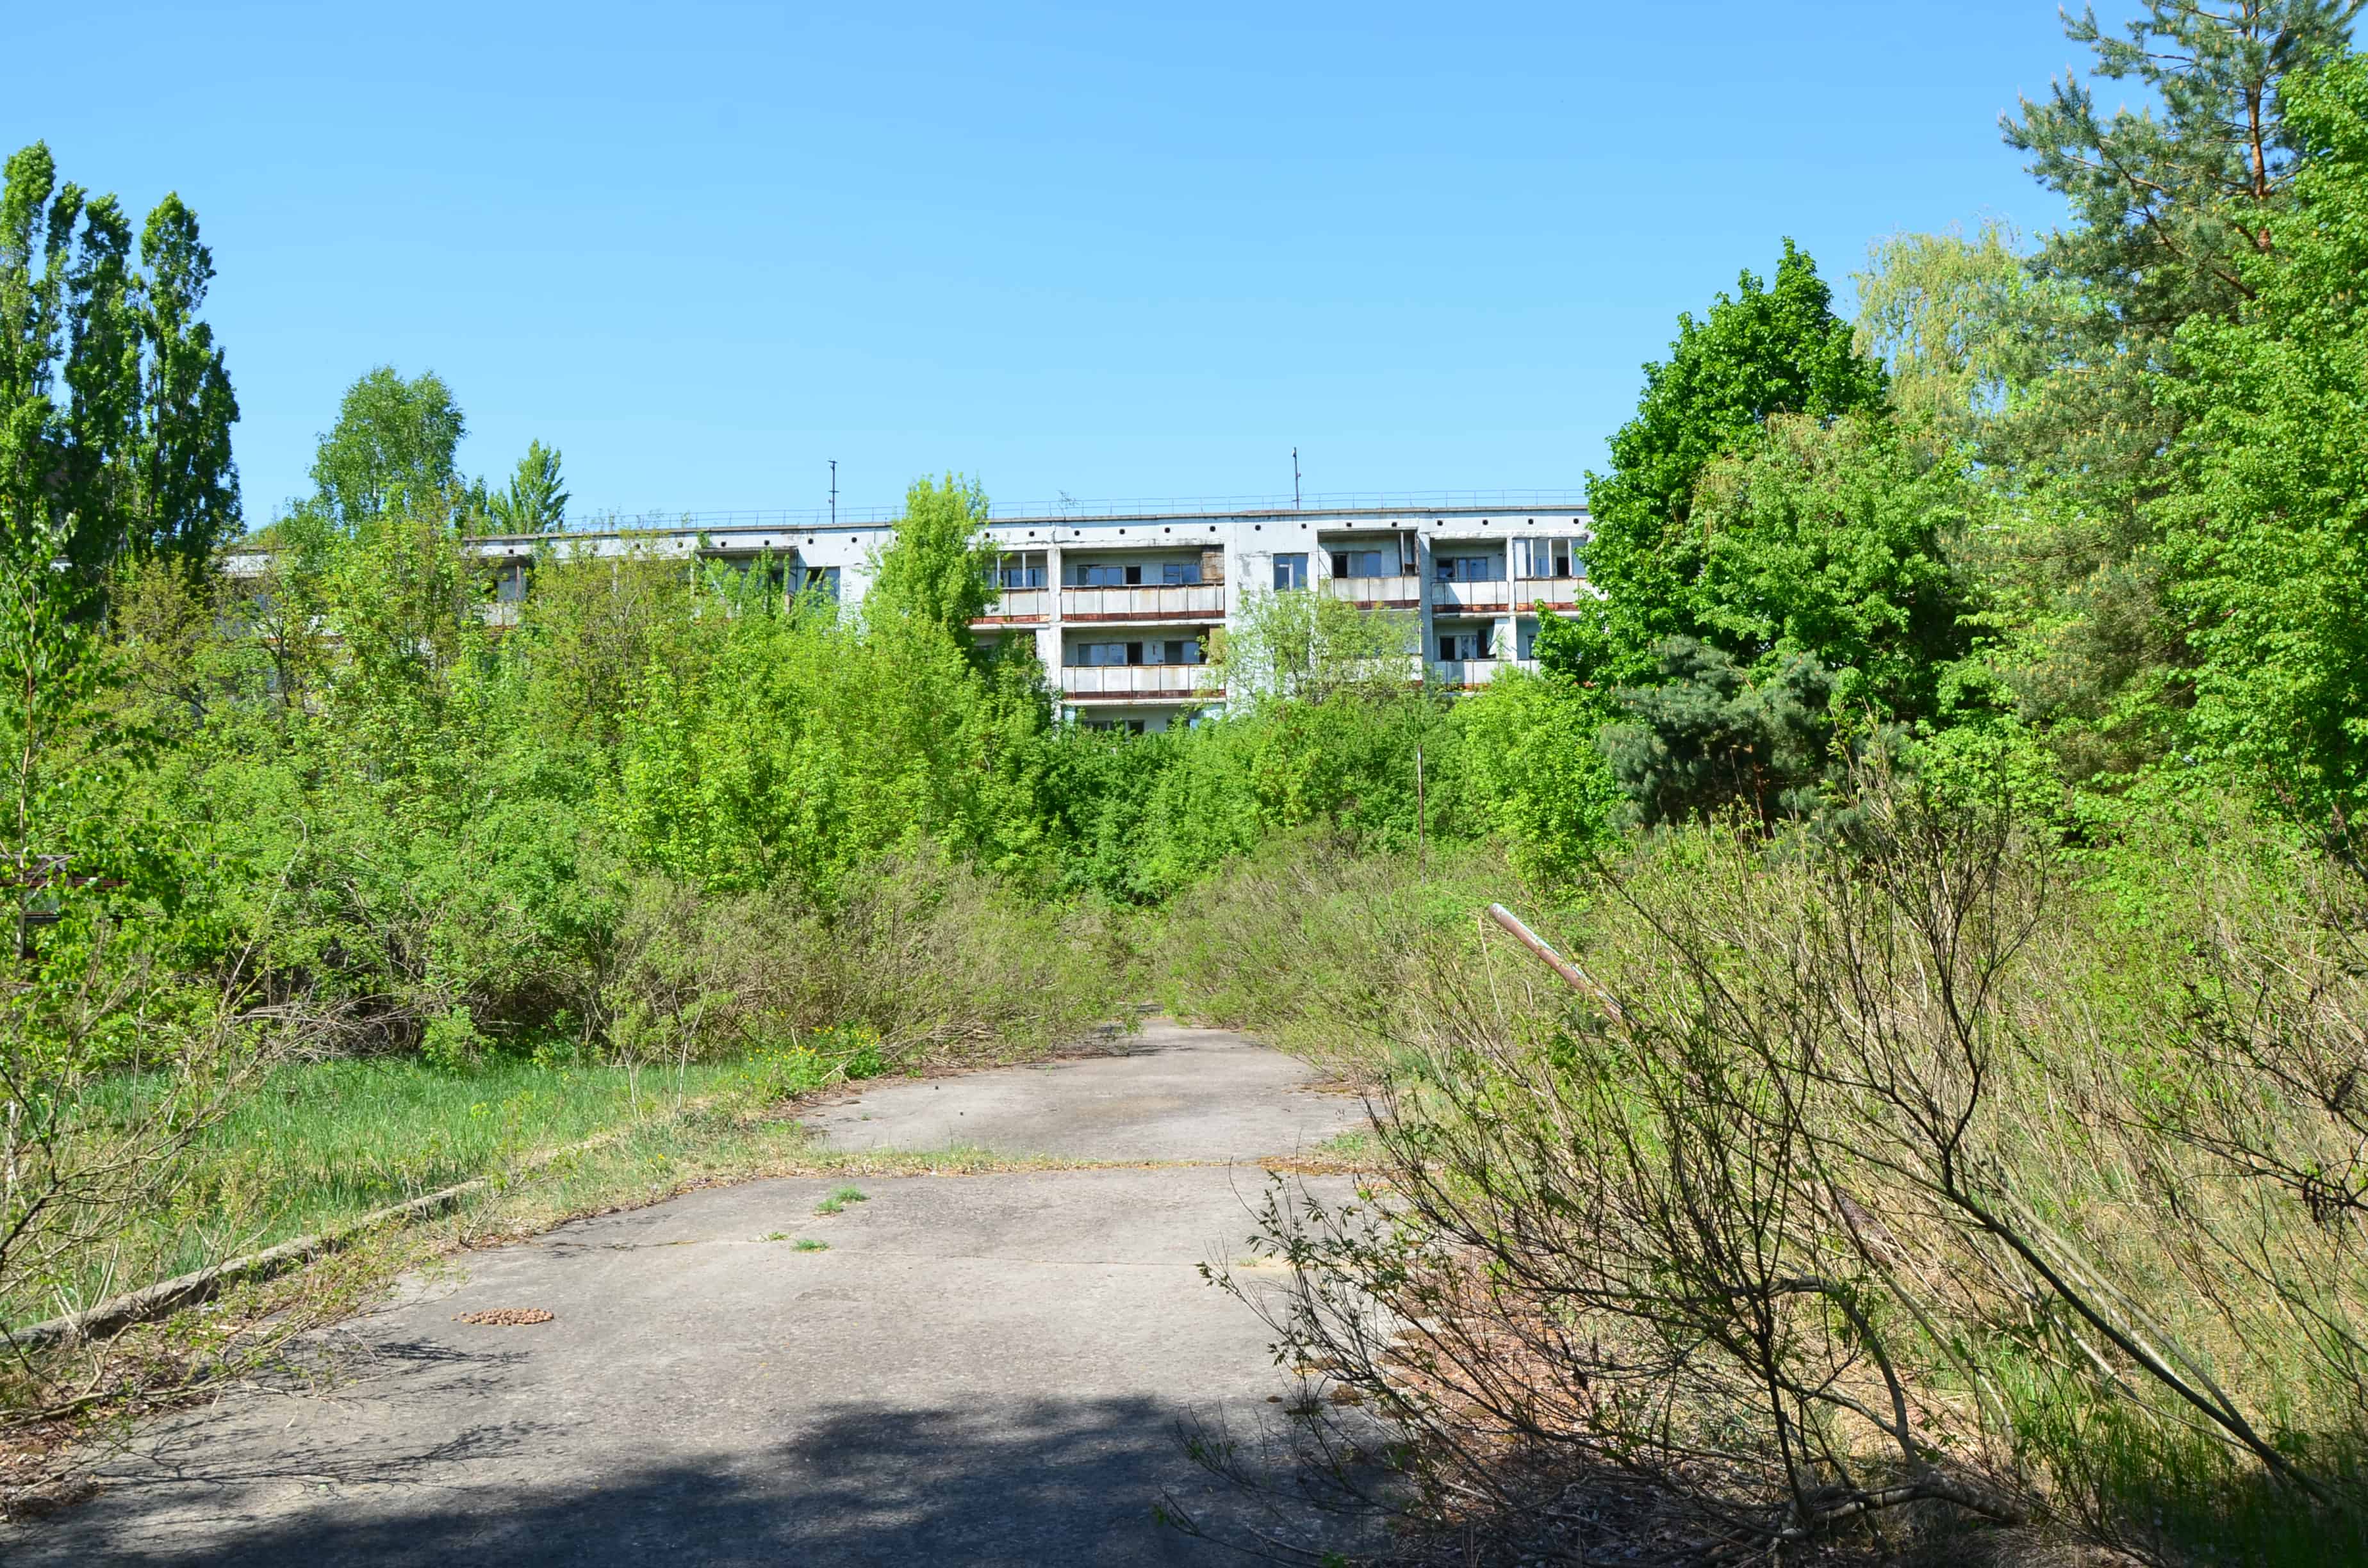 13 Sportivnaya Street in Pripyat, Chernobyl Exclusion Zone, Ukraine